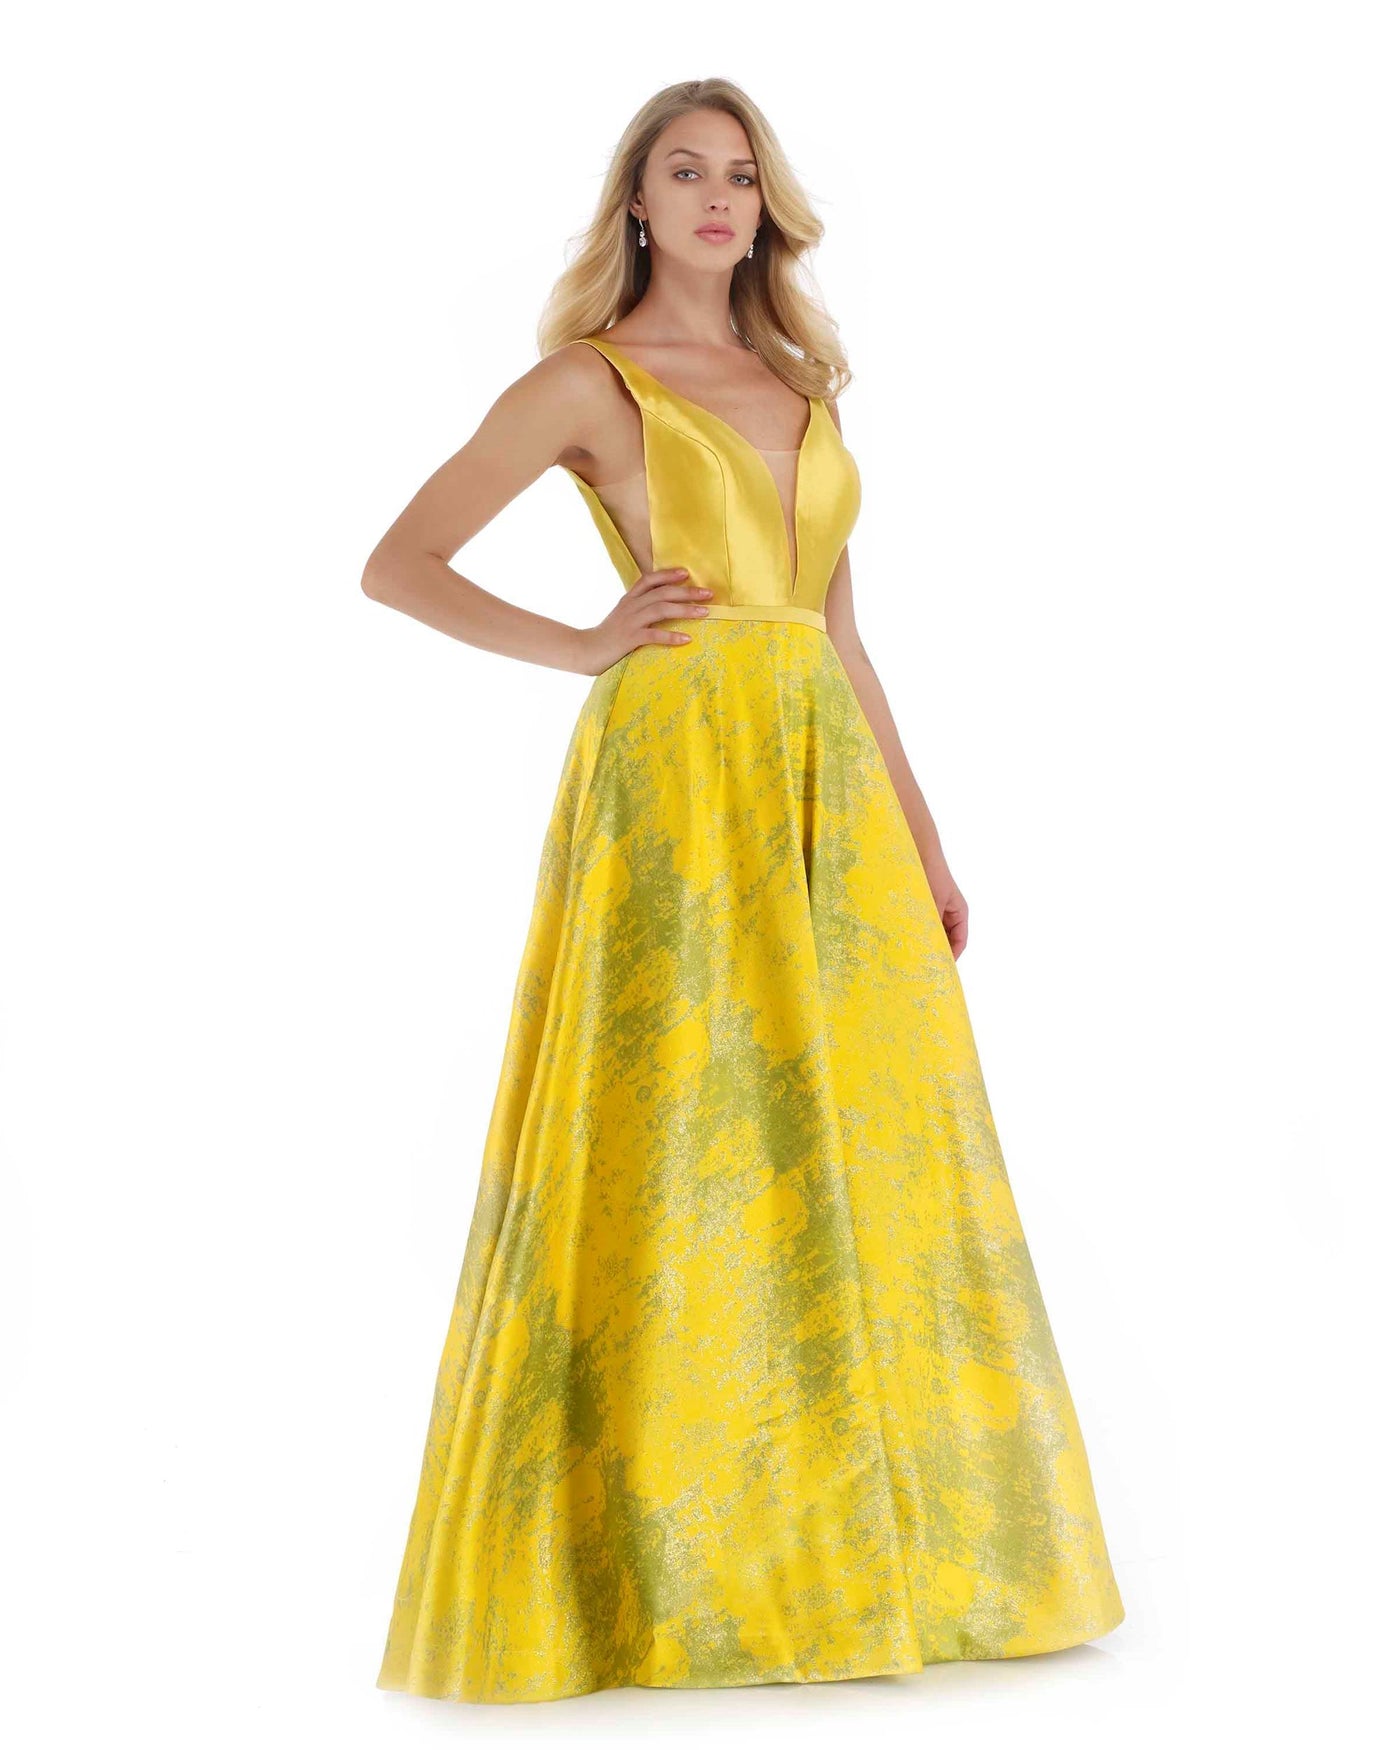 Morrell Maxie - 16067 Deep V-neck Metallic Jacquard A-line Dress in Yellow